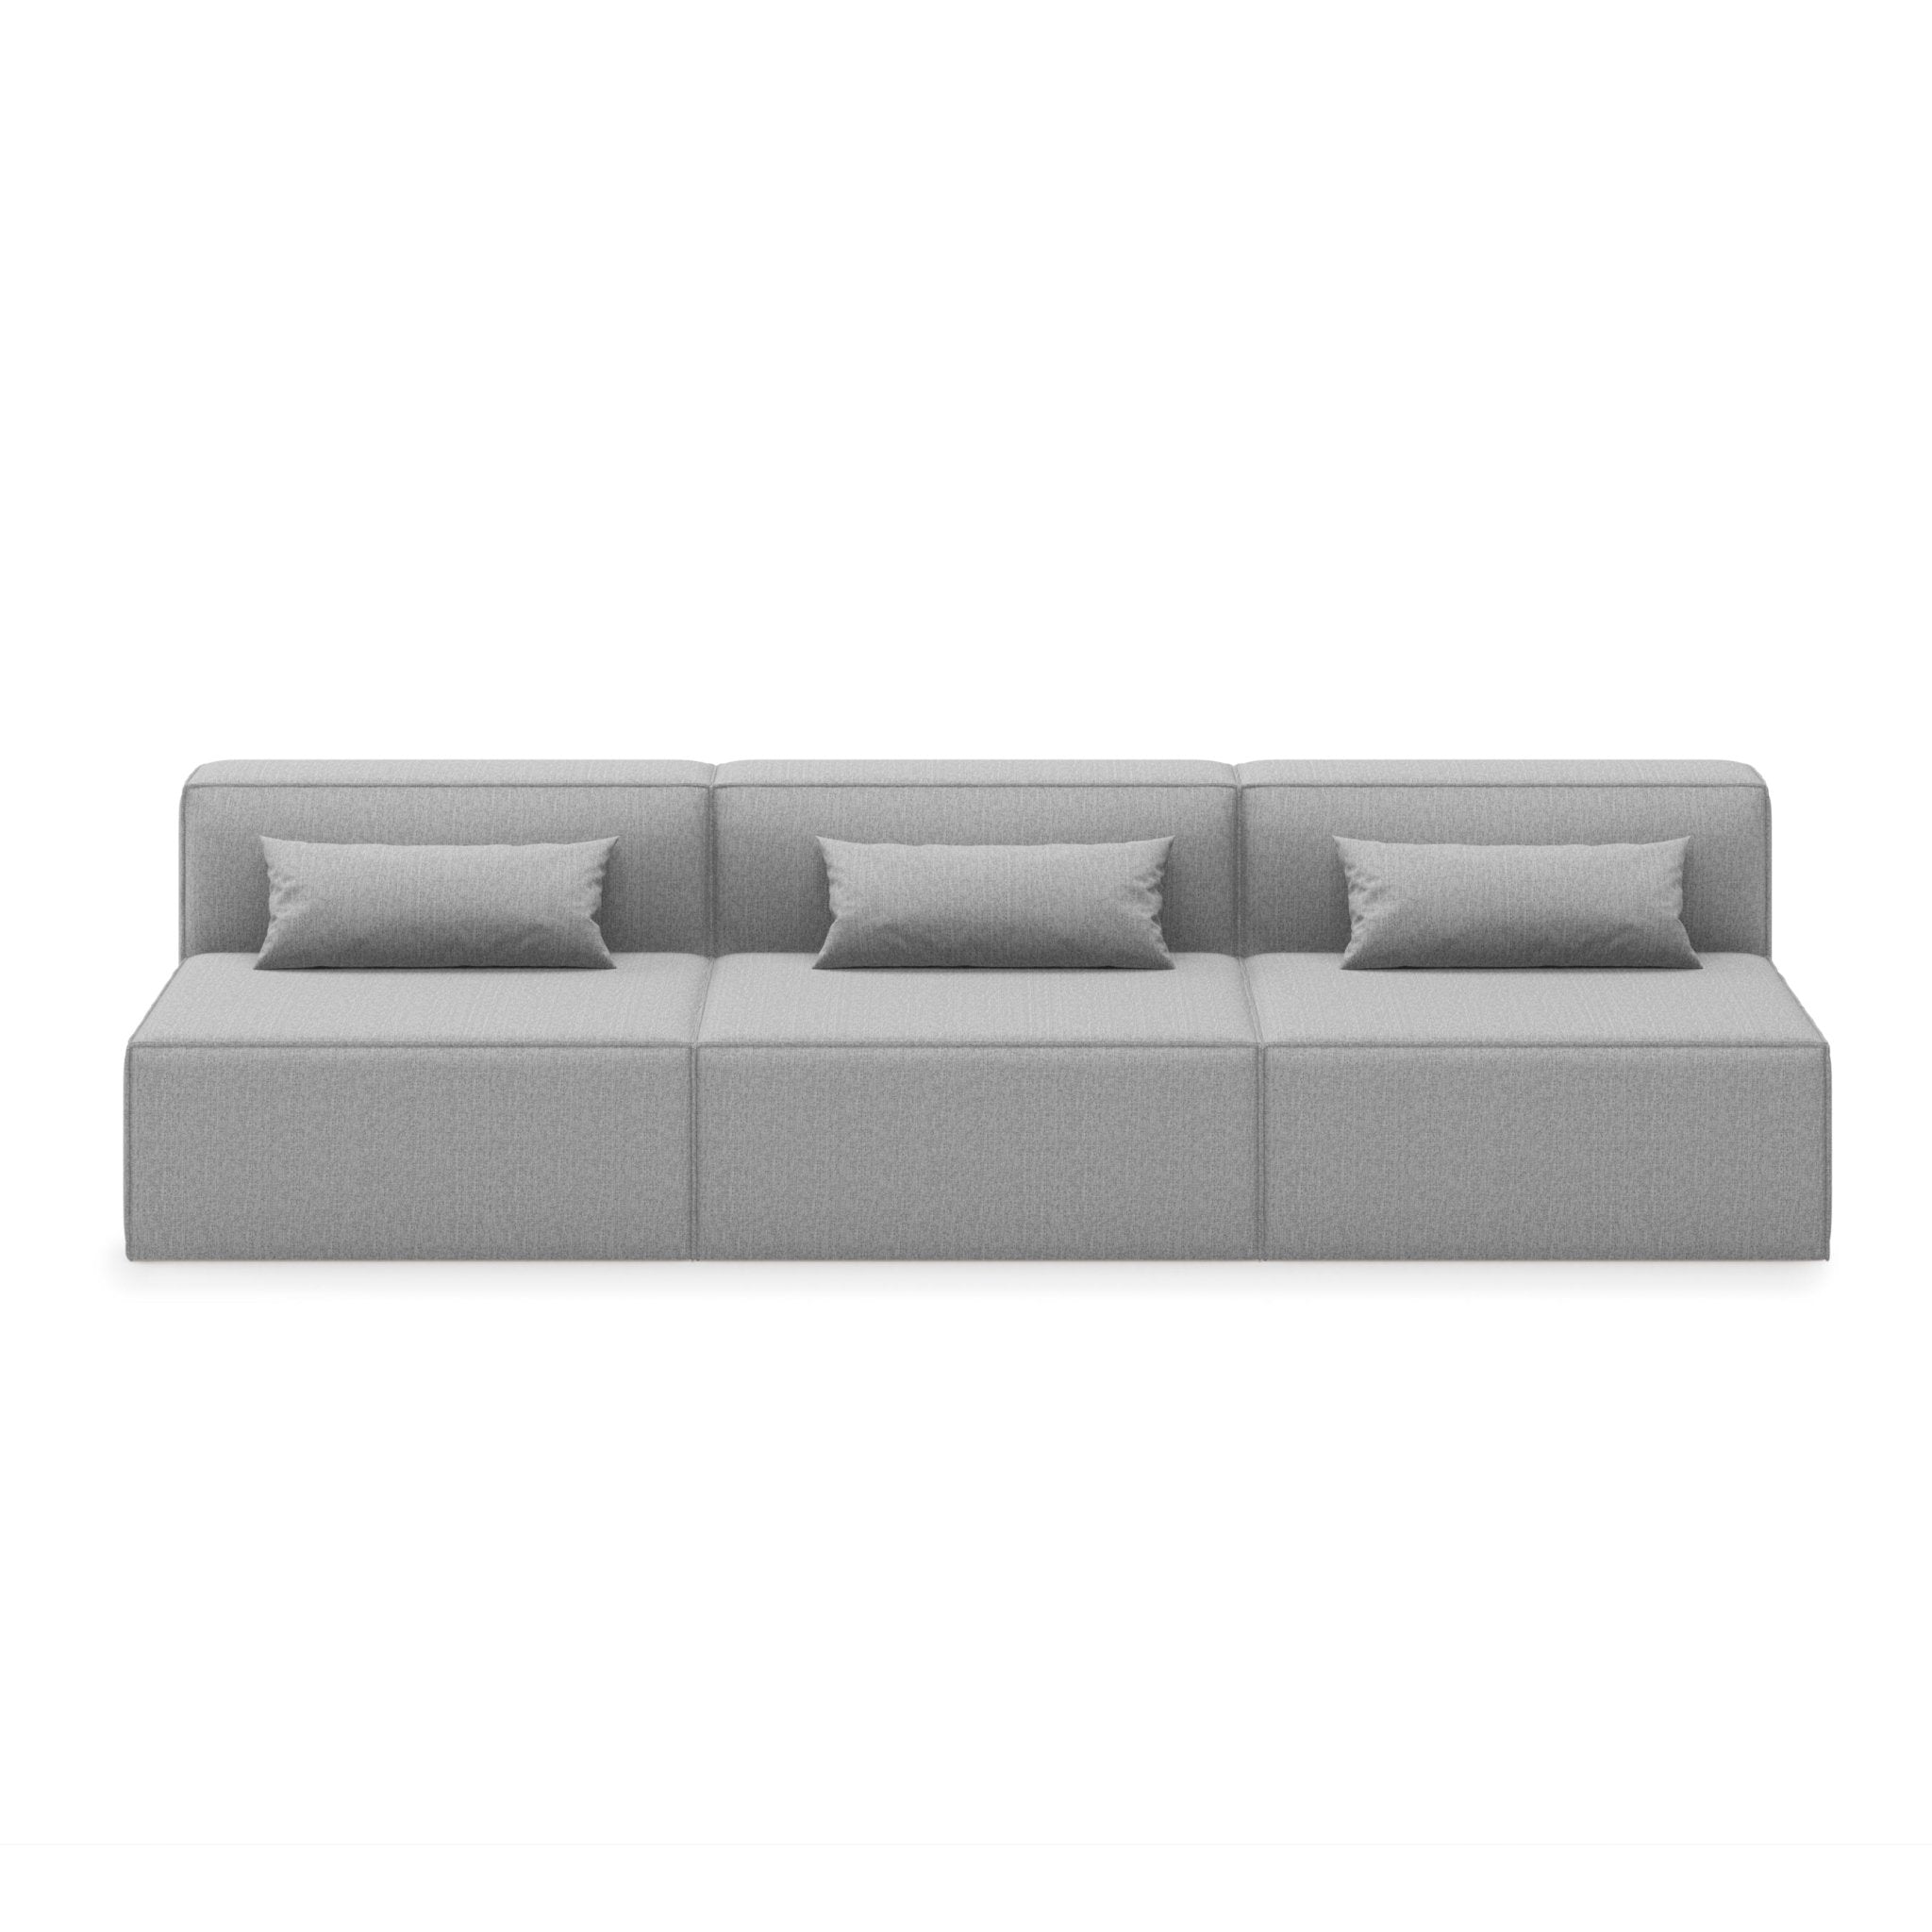 Mix Armless Sofa: 3-Seater - Parliament Stone